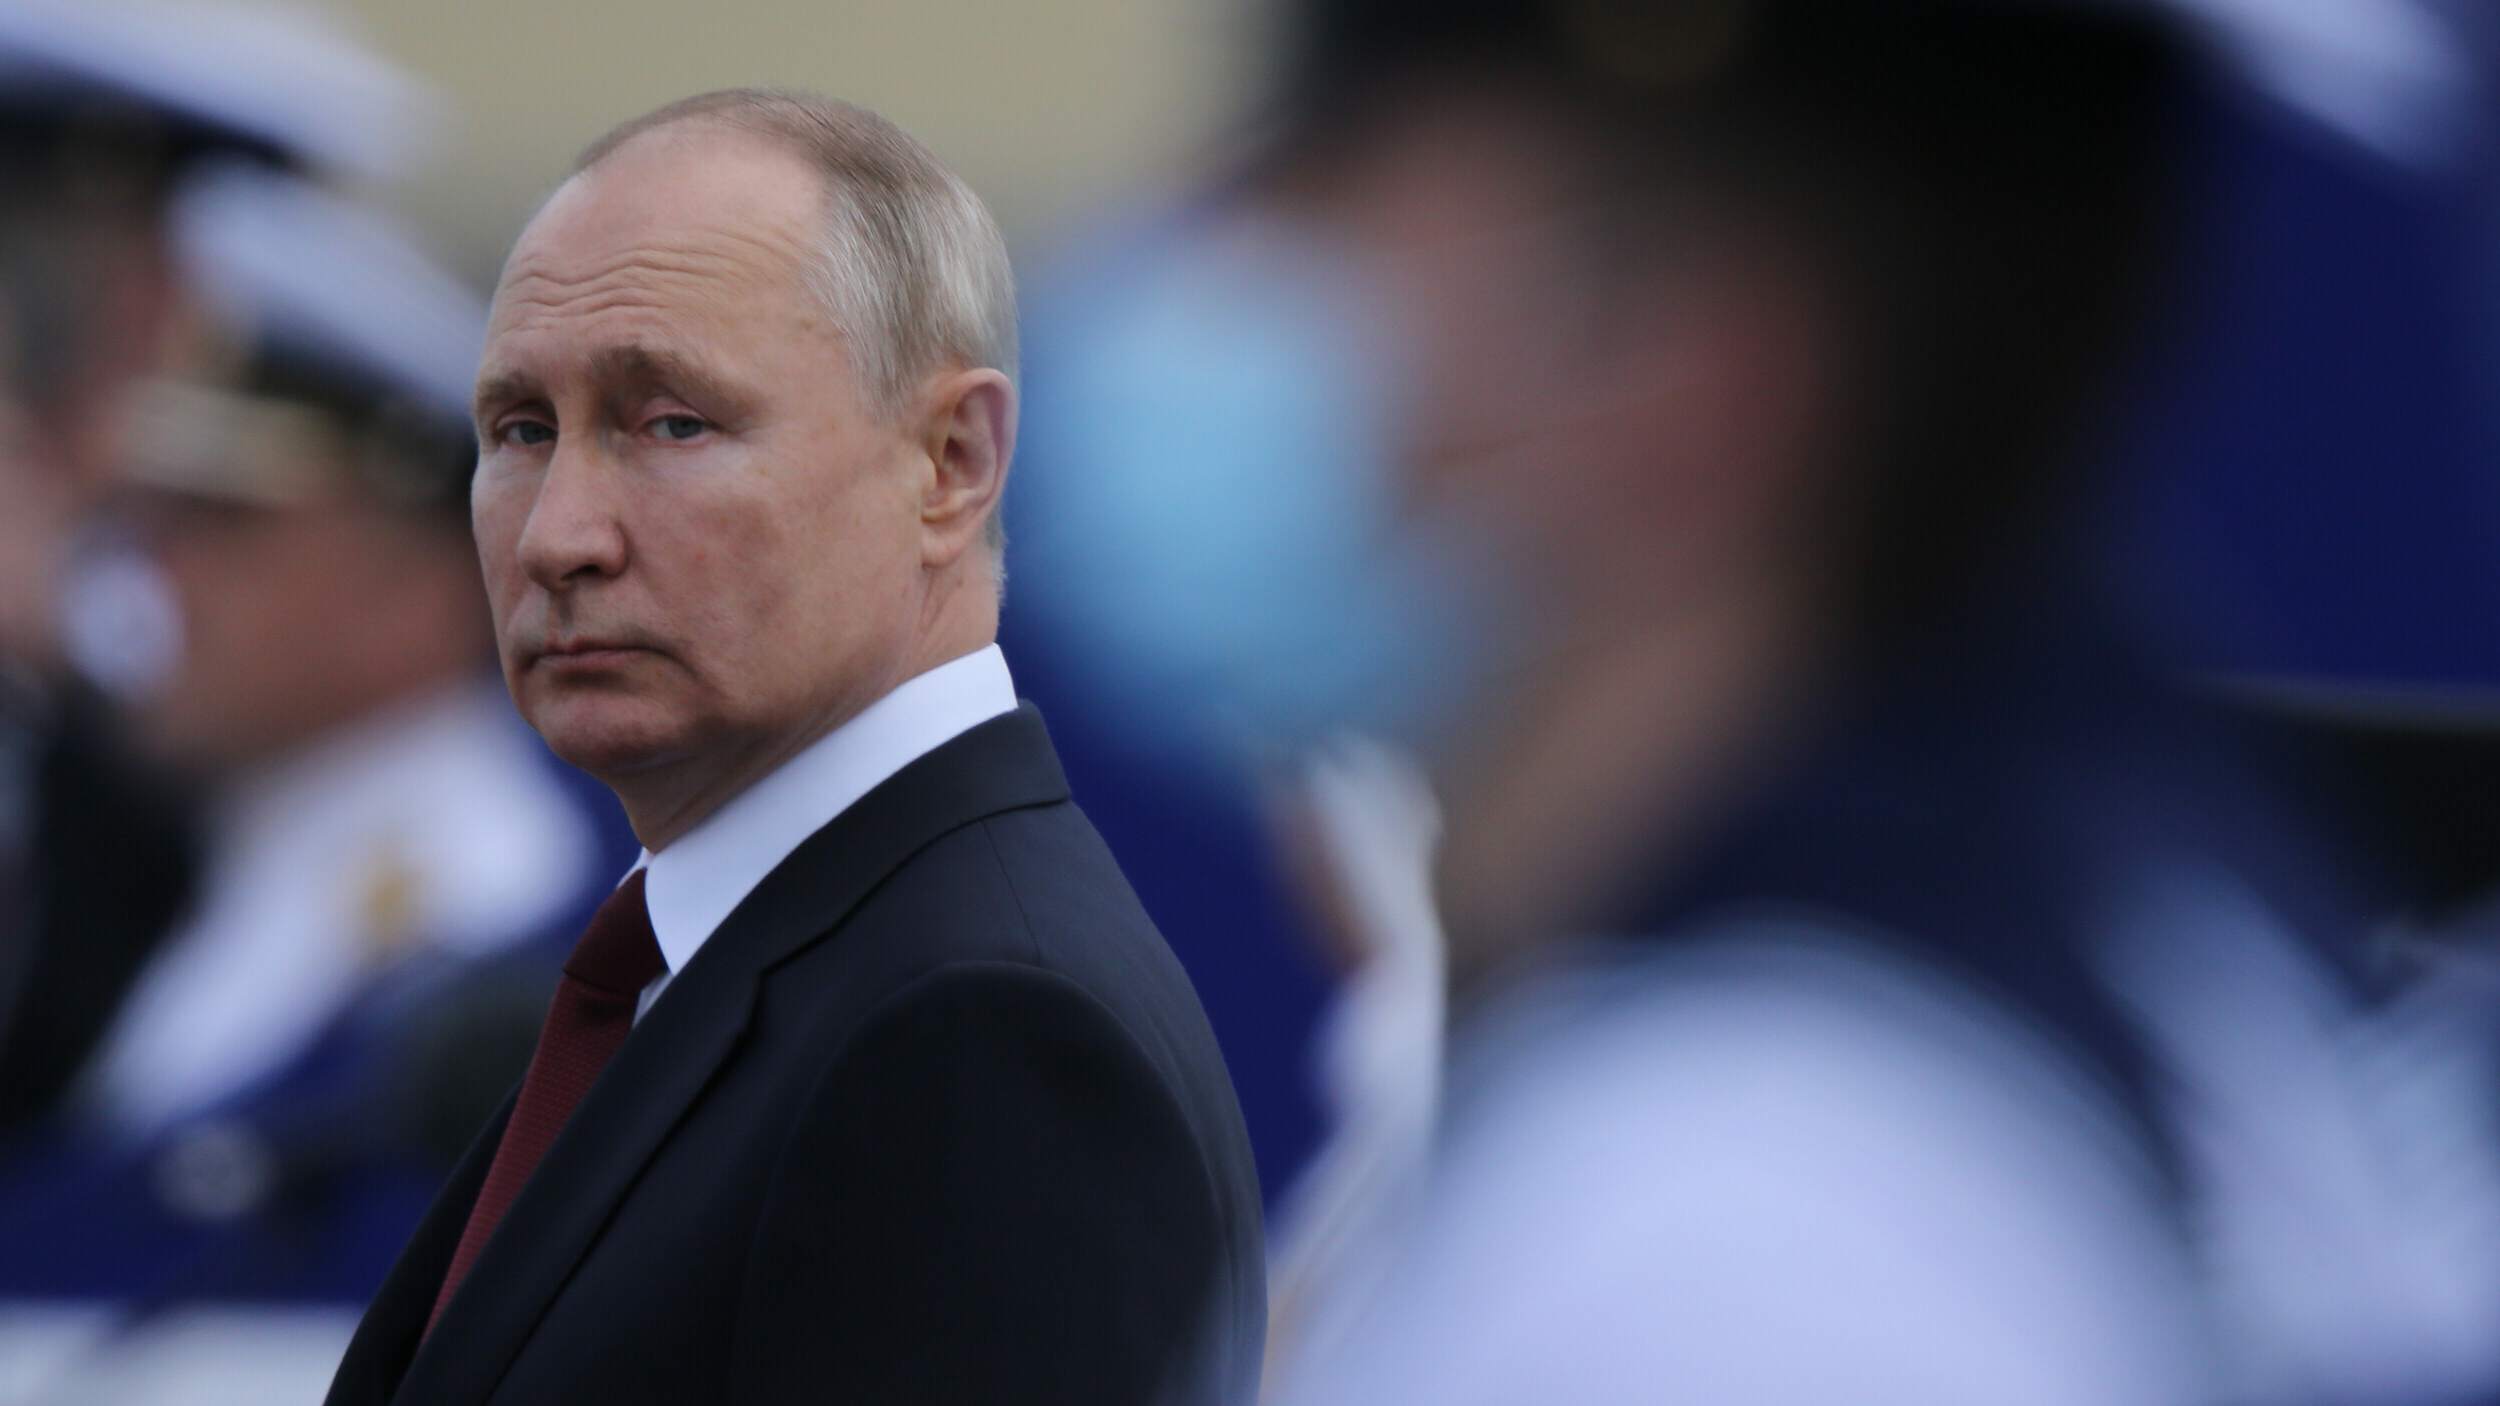 Politico: Ο Πούτιν θα είναι ο μεγάλος ηττημένος του ενεργειακού πολέμου που ξεκίνησε ο ίδιος